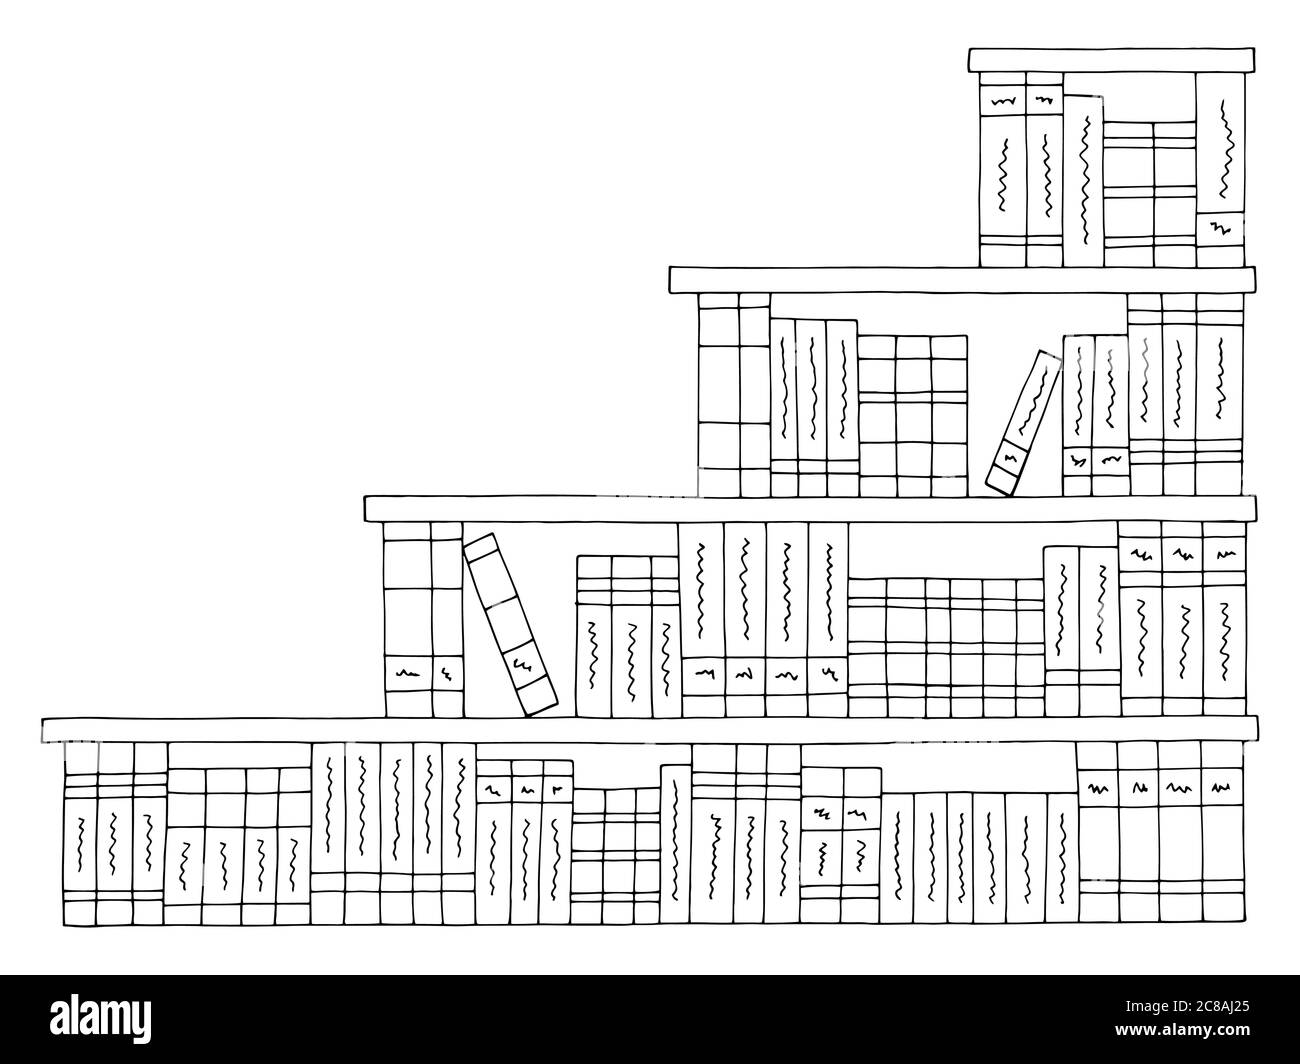 Bücherregal Treppen Grafik schwarz weiß isoliert Skizze Illustration Vektor Stock Vektor